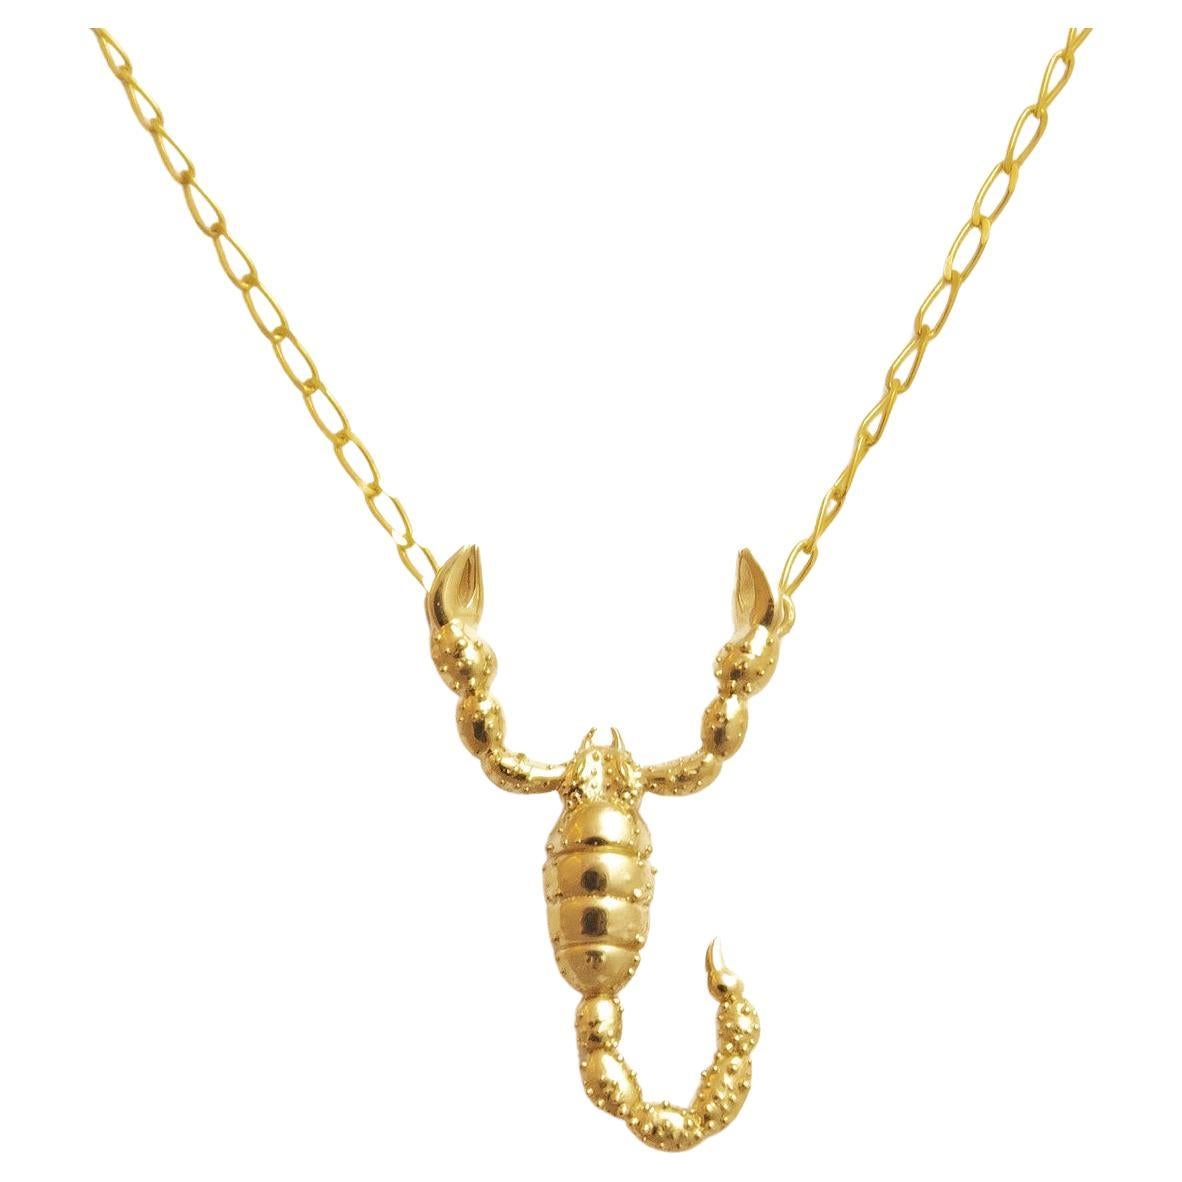 JHERWITT Plated 14k Gold Large Scorpion Pendant Necklace